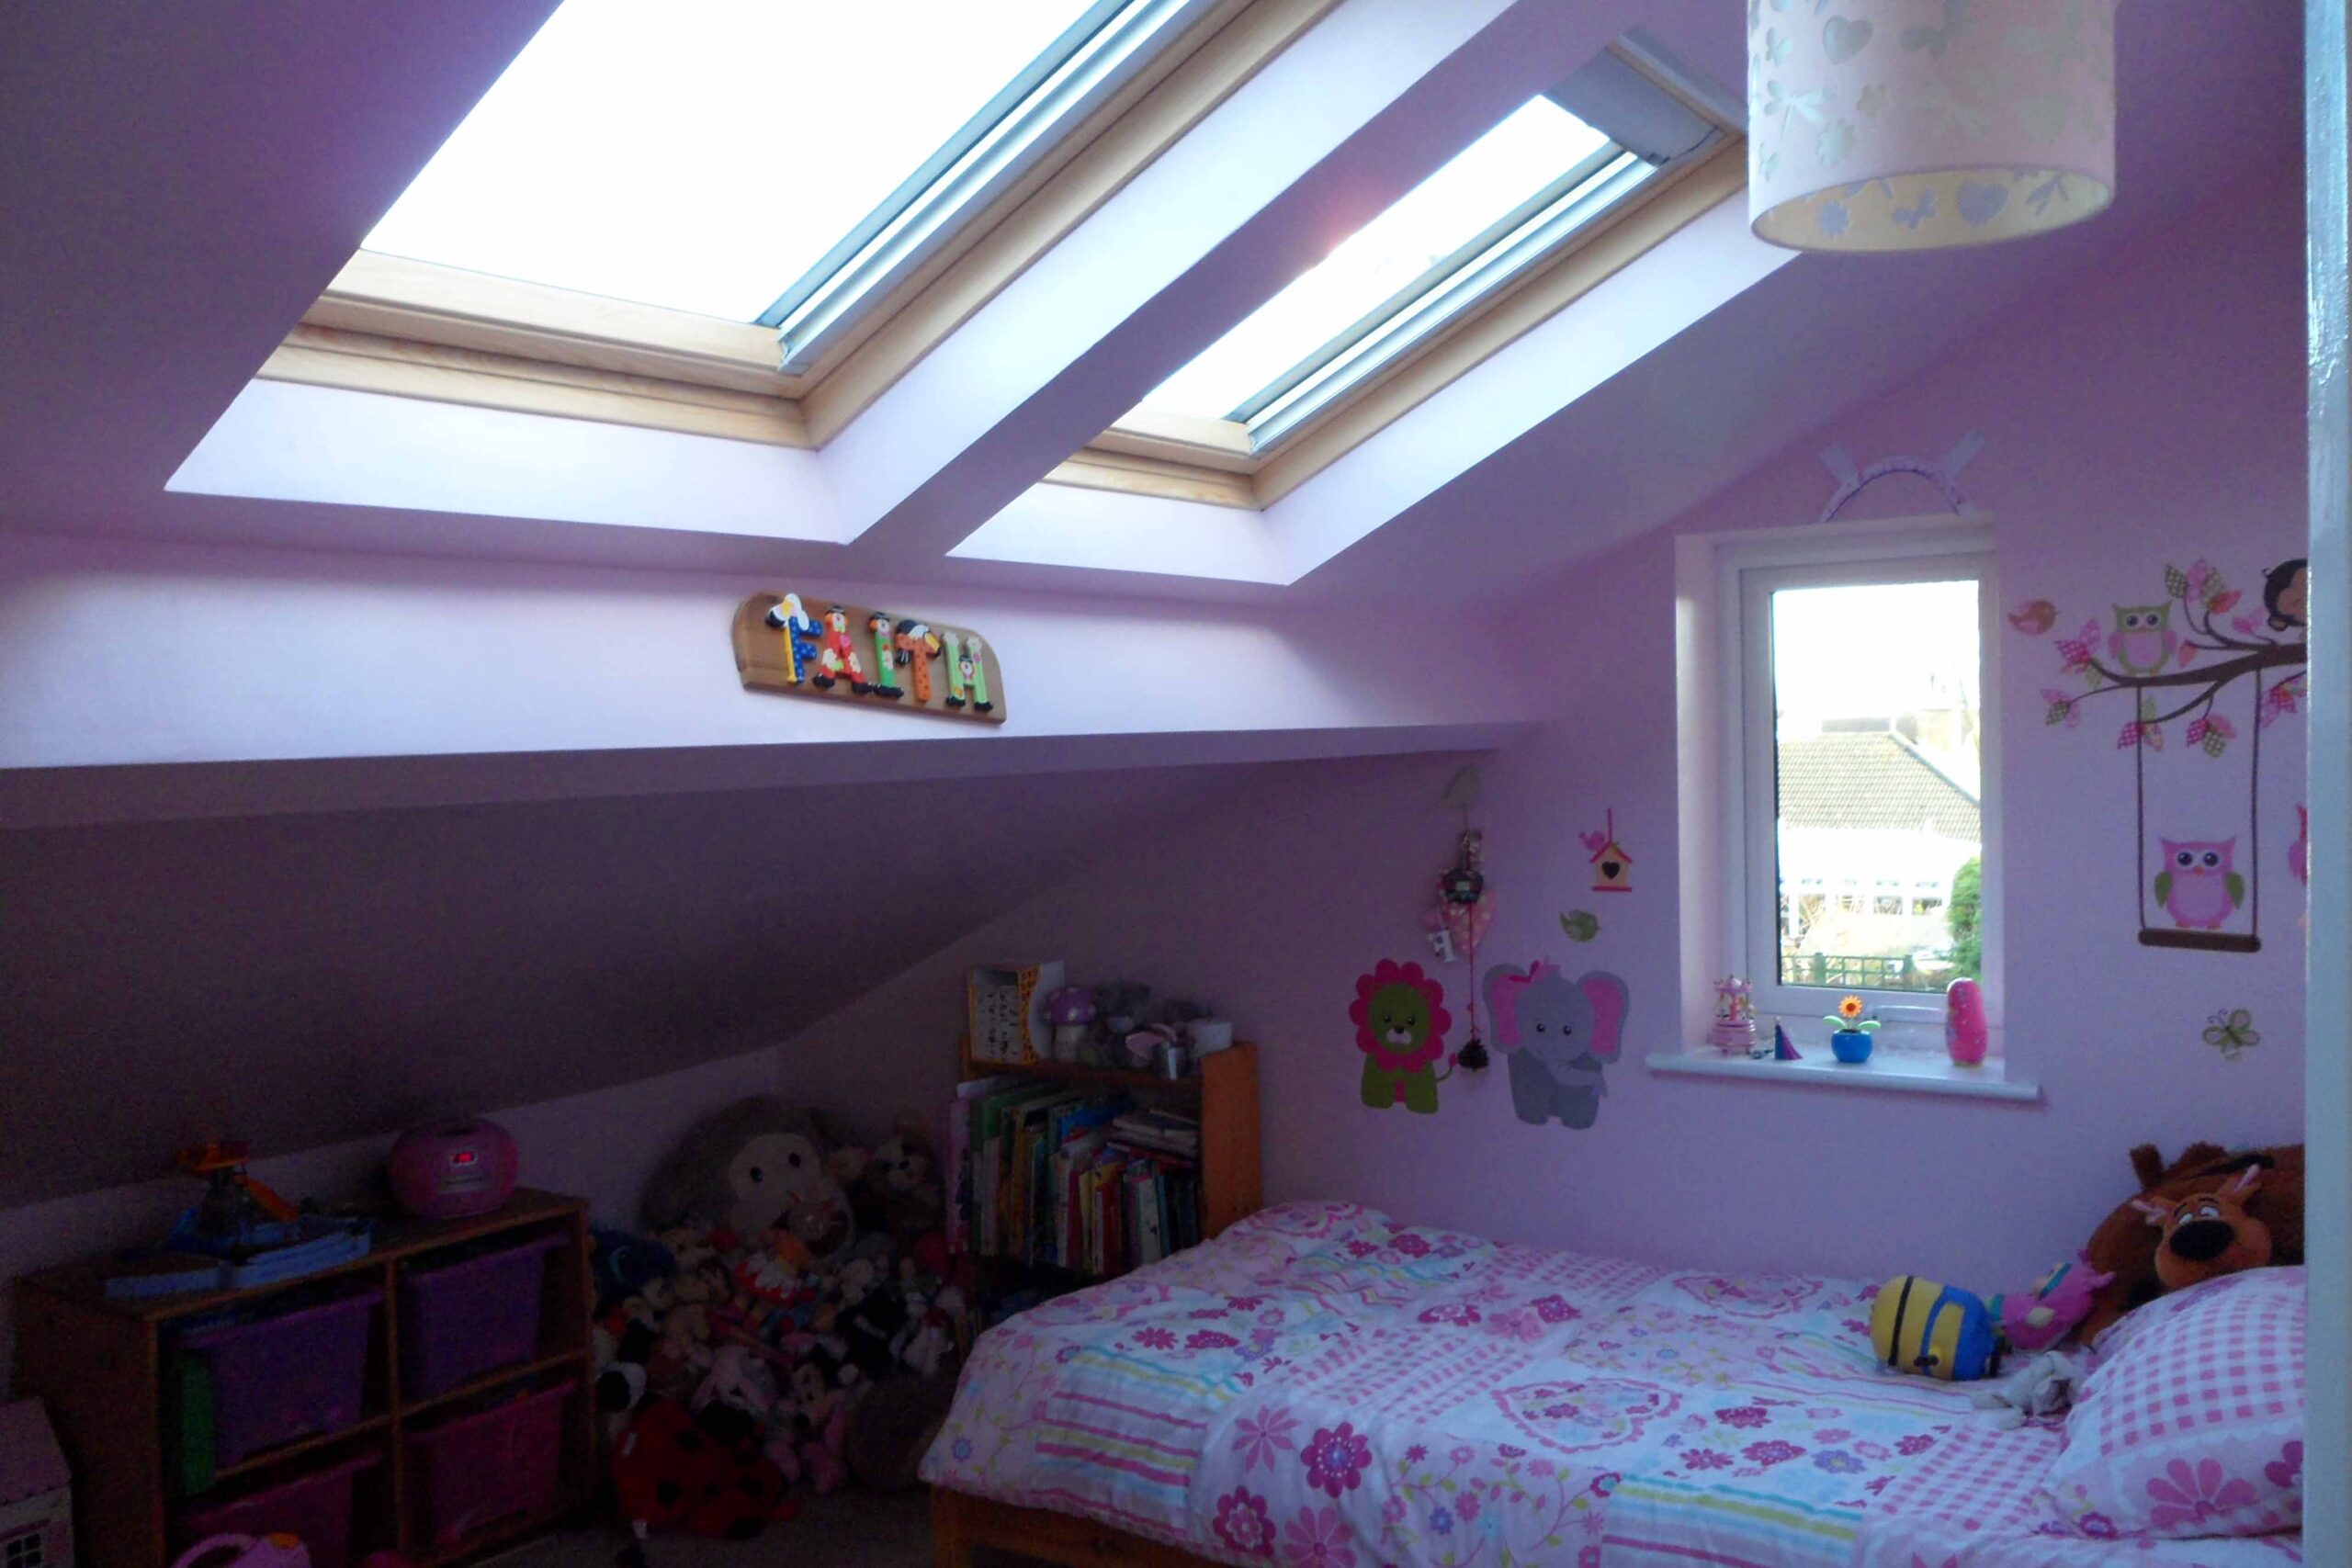 Loft converison with kids bedroom 2 in Wollaton, Nottingham